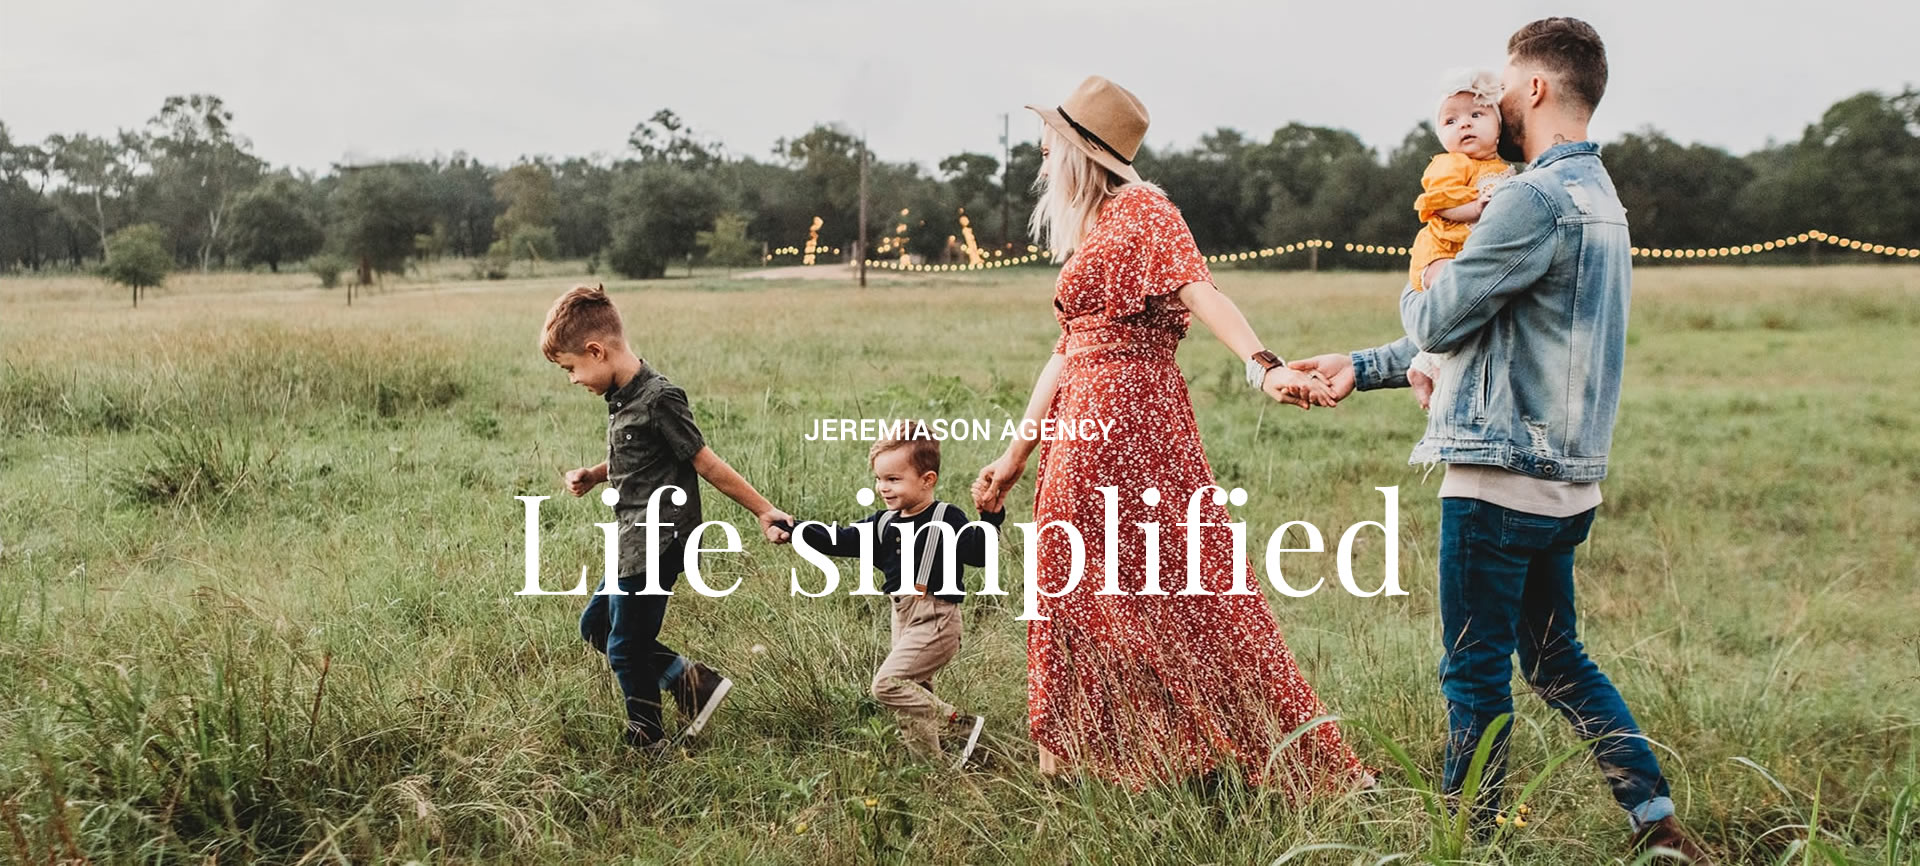 Cal Jeremiason Agency: Life Simplified